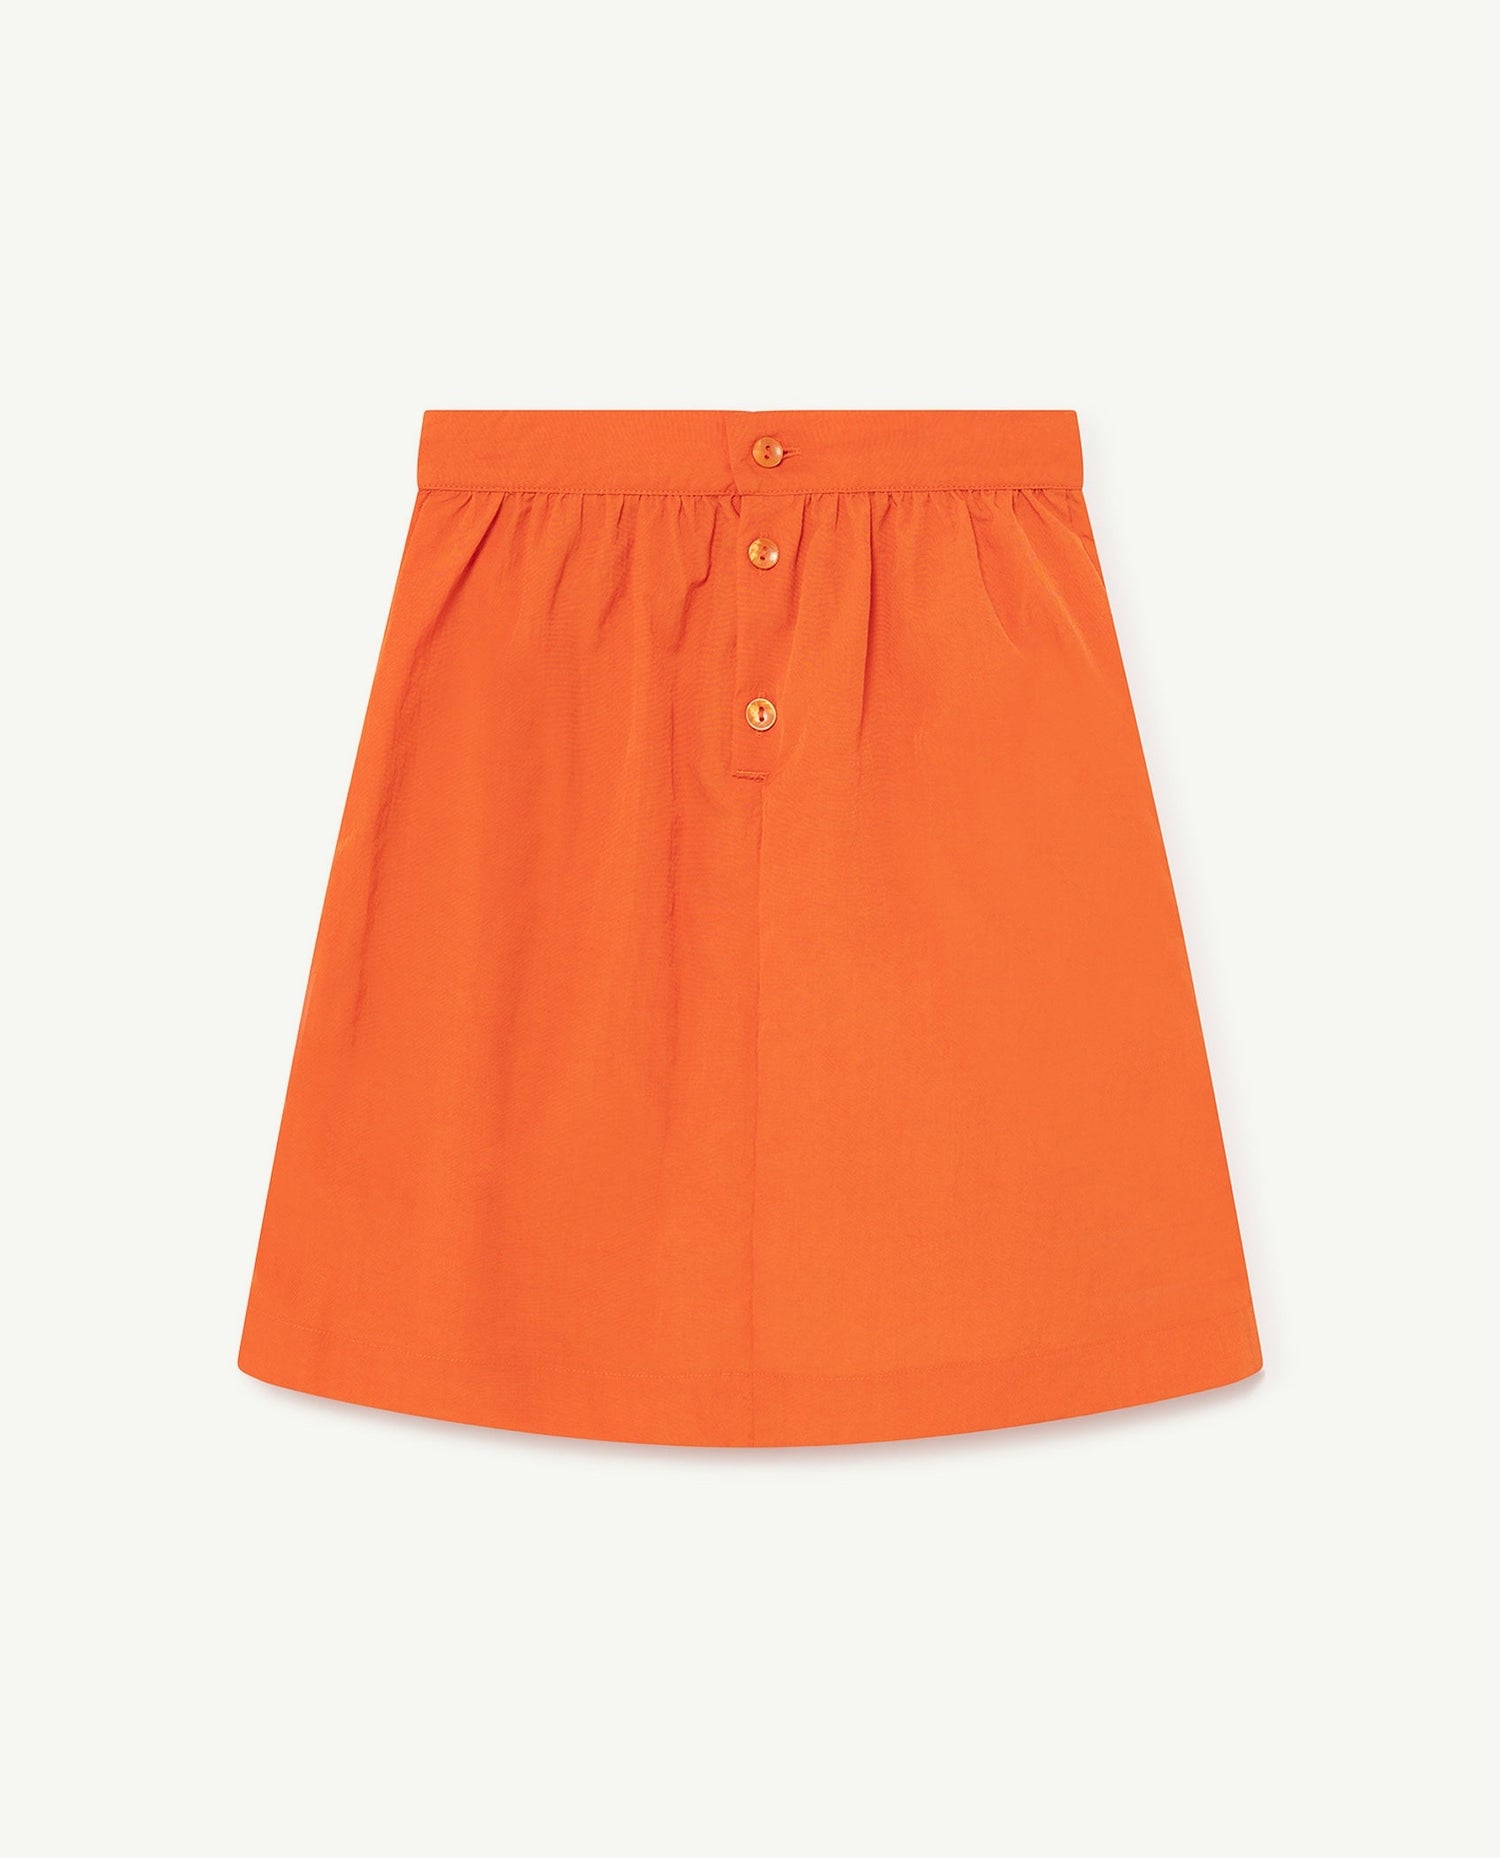 Bird kids skirt orange logo Skirts The Animals Observatory 